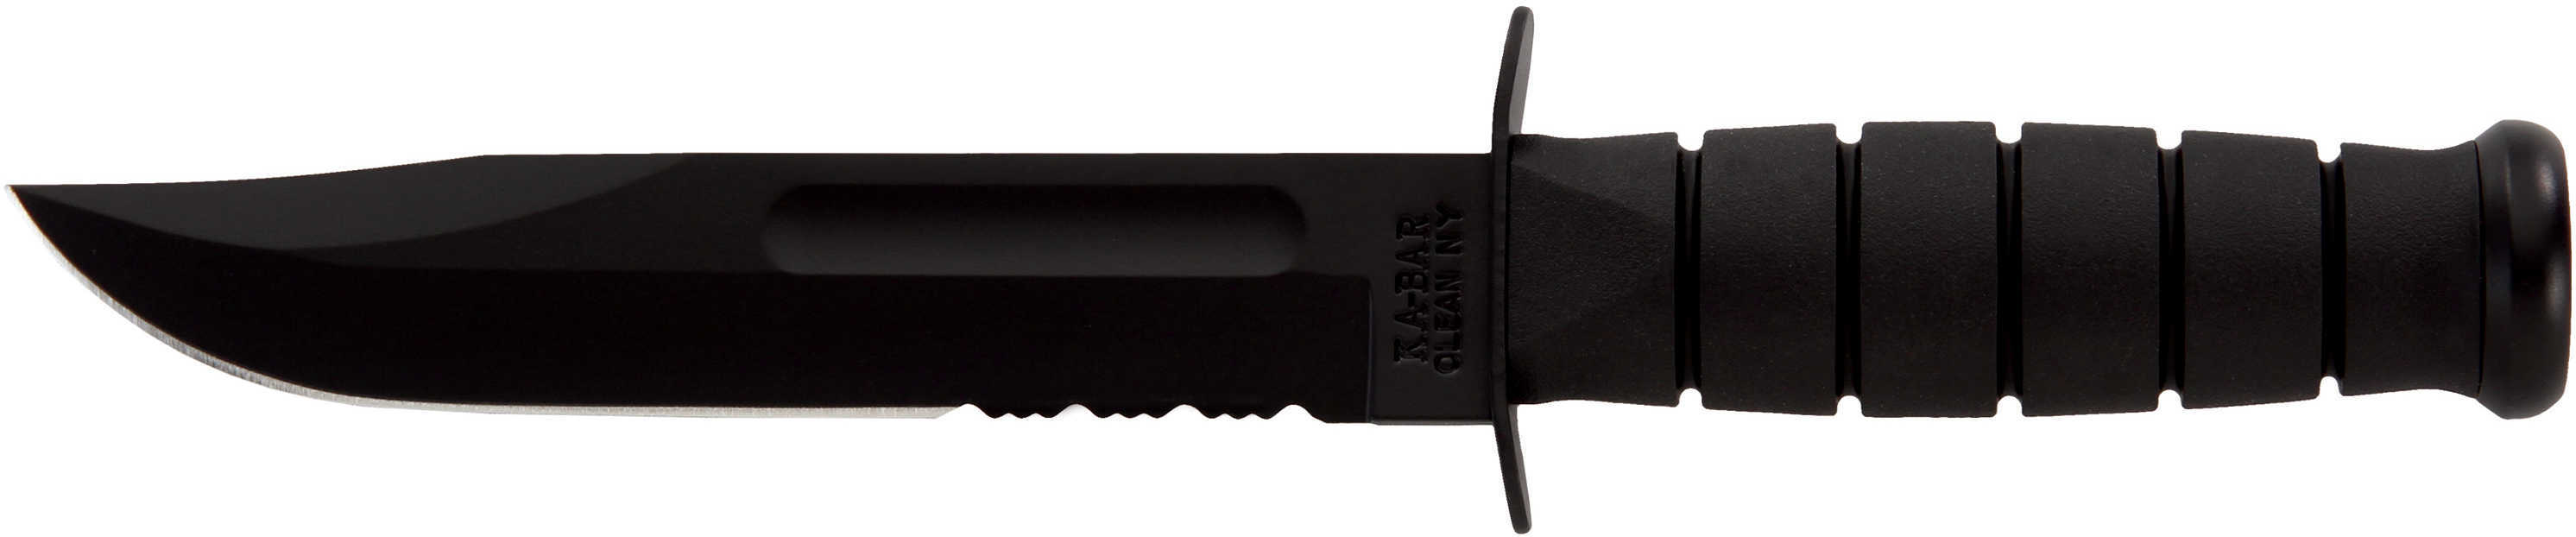 KA-BAR Fighting/Utility Knife 7" SERR W/Plastic Sheath Black